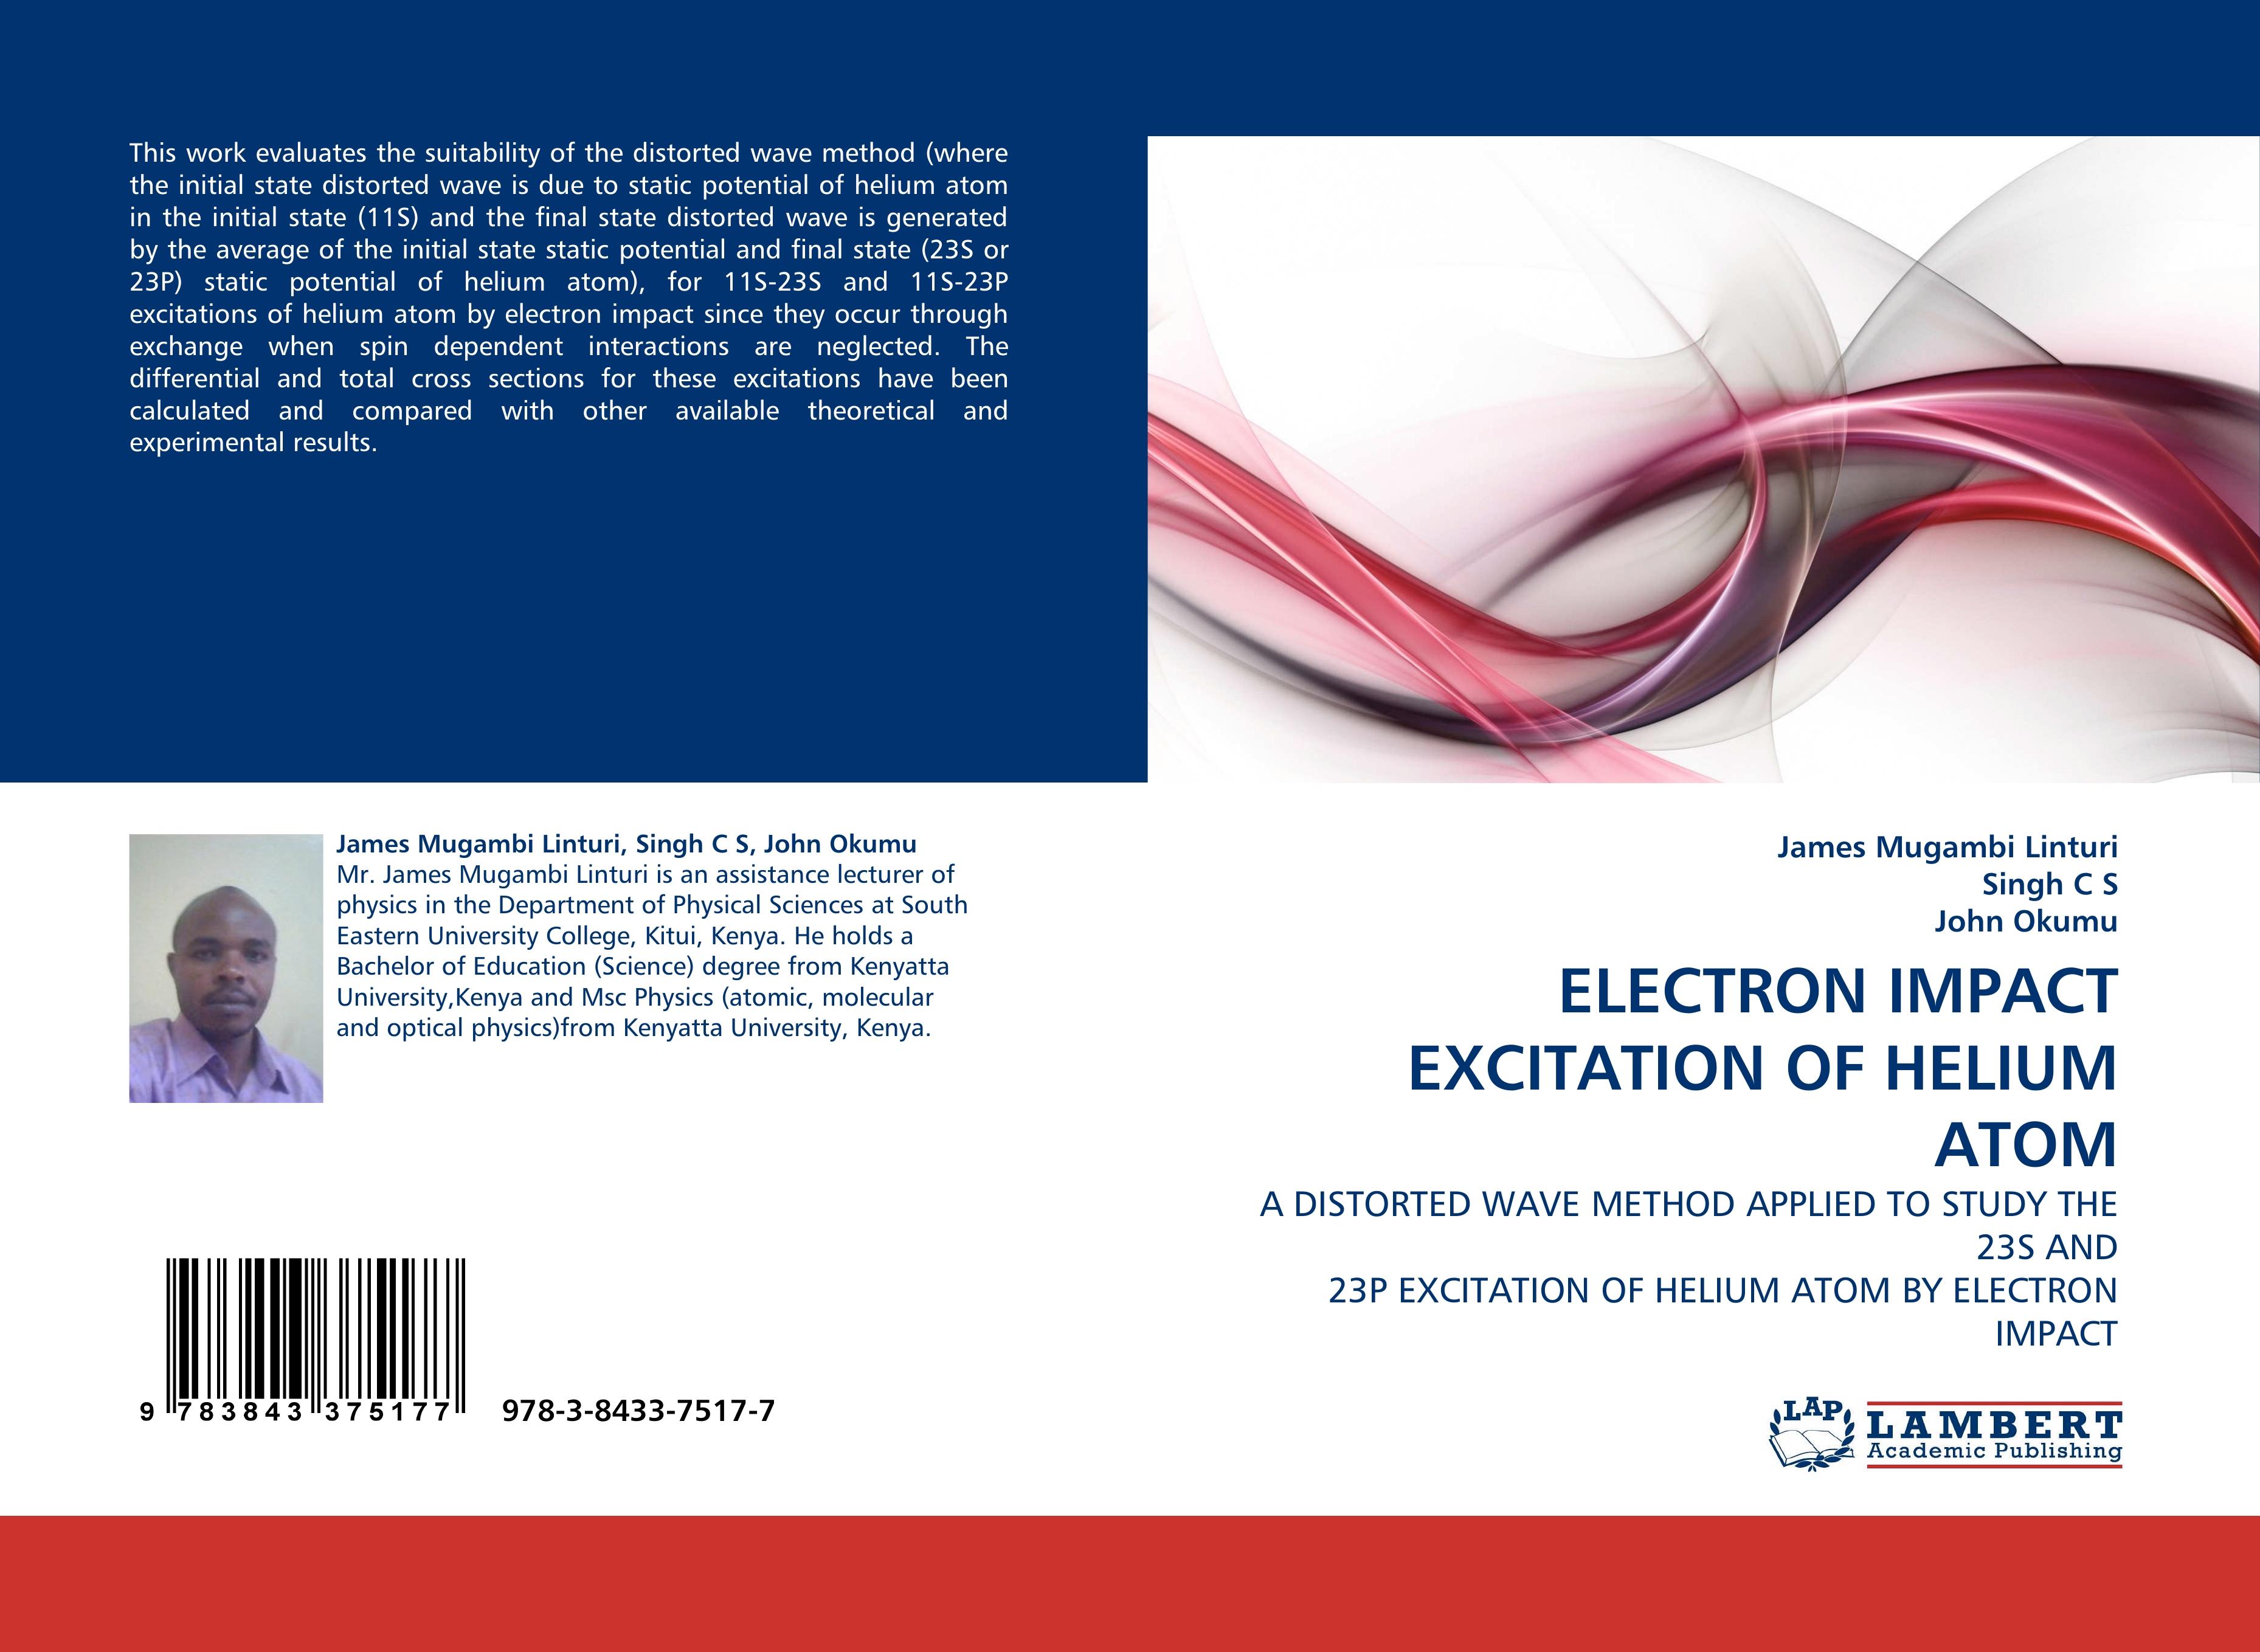 ELECTRON IMPACT EXCITATION OF HELIUM ATOM - James Mugambi Linturi Singh C S John Okumu